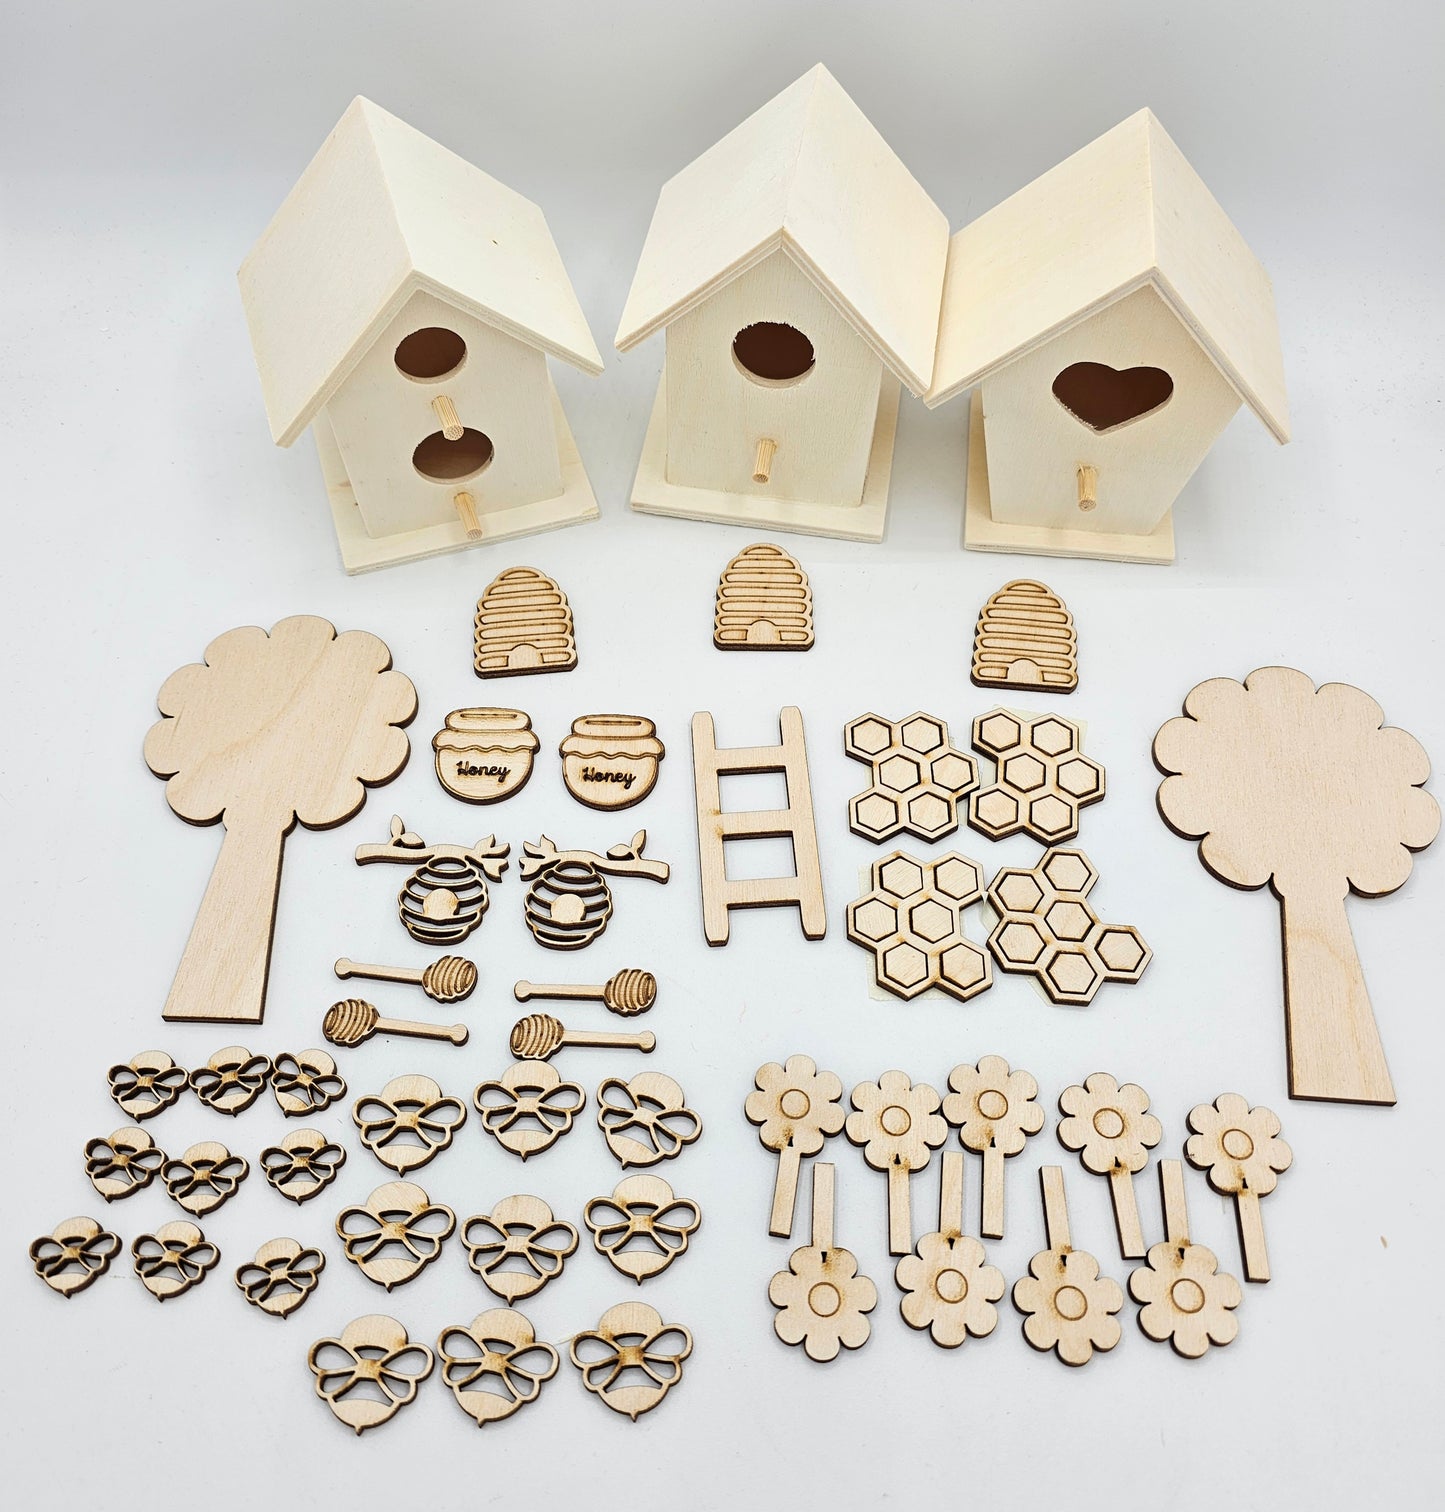 Spring Bird House Kits